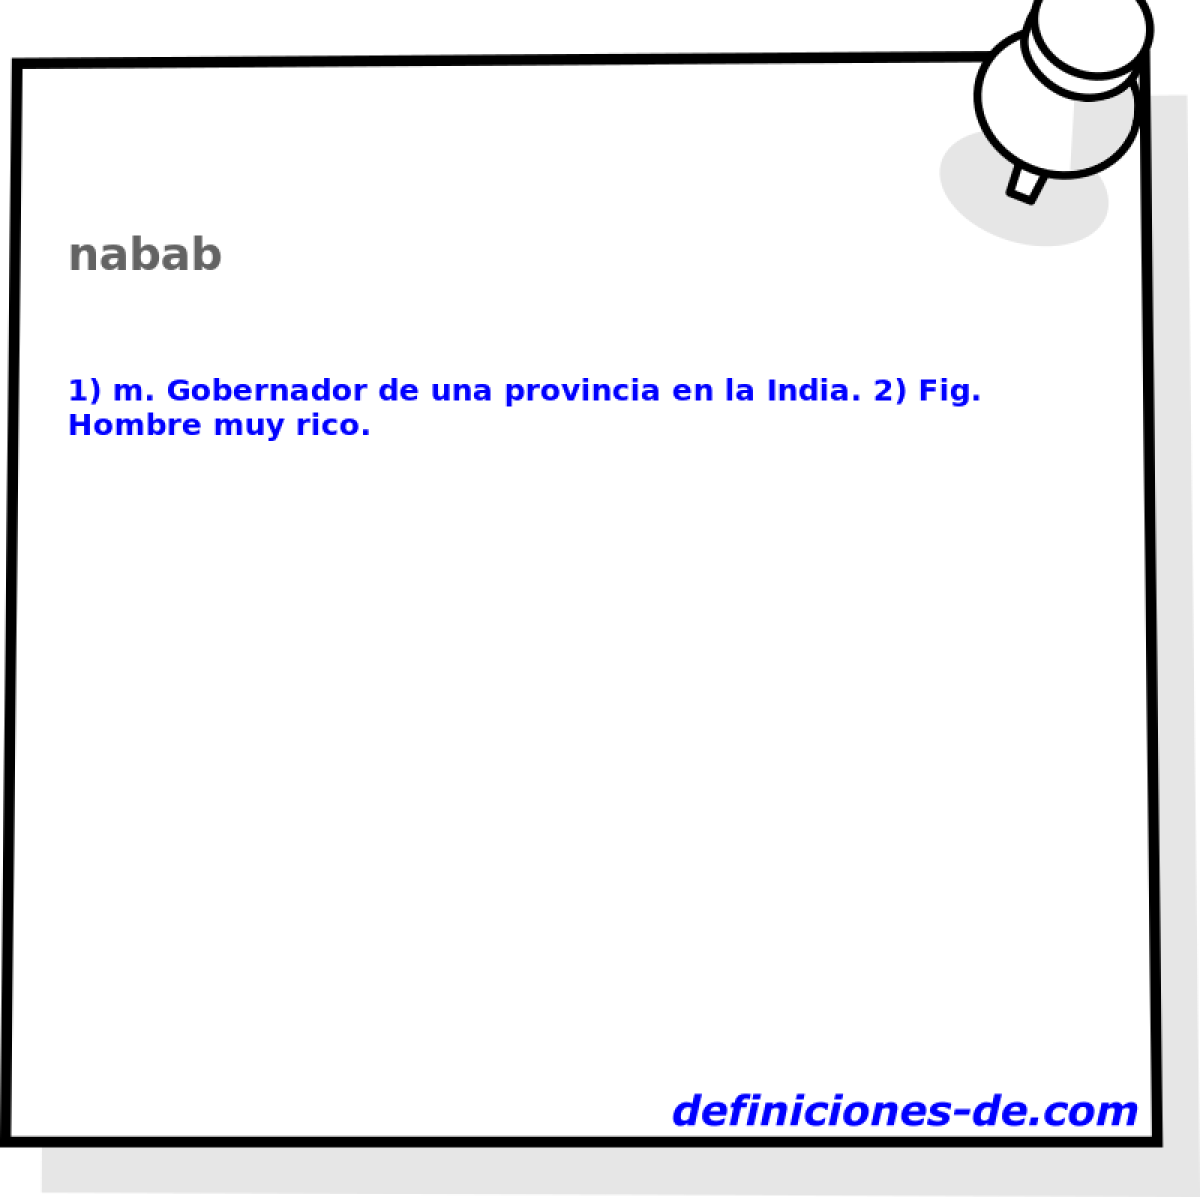 nabab 